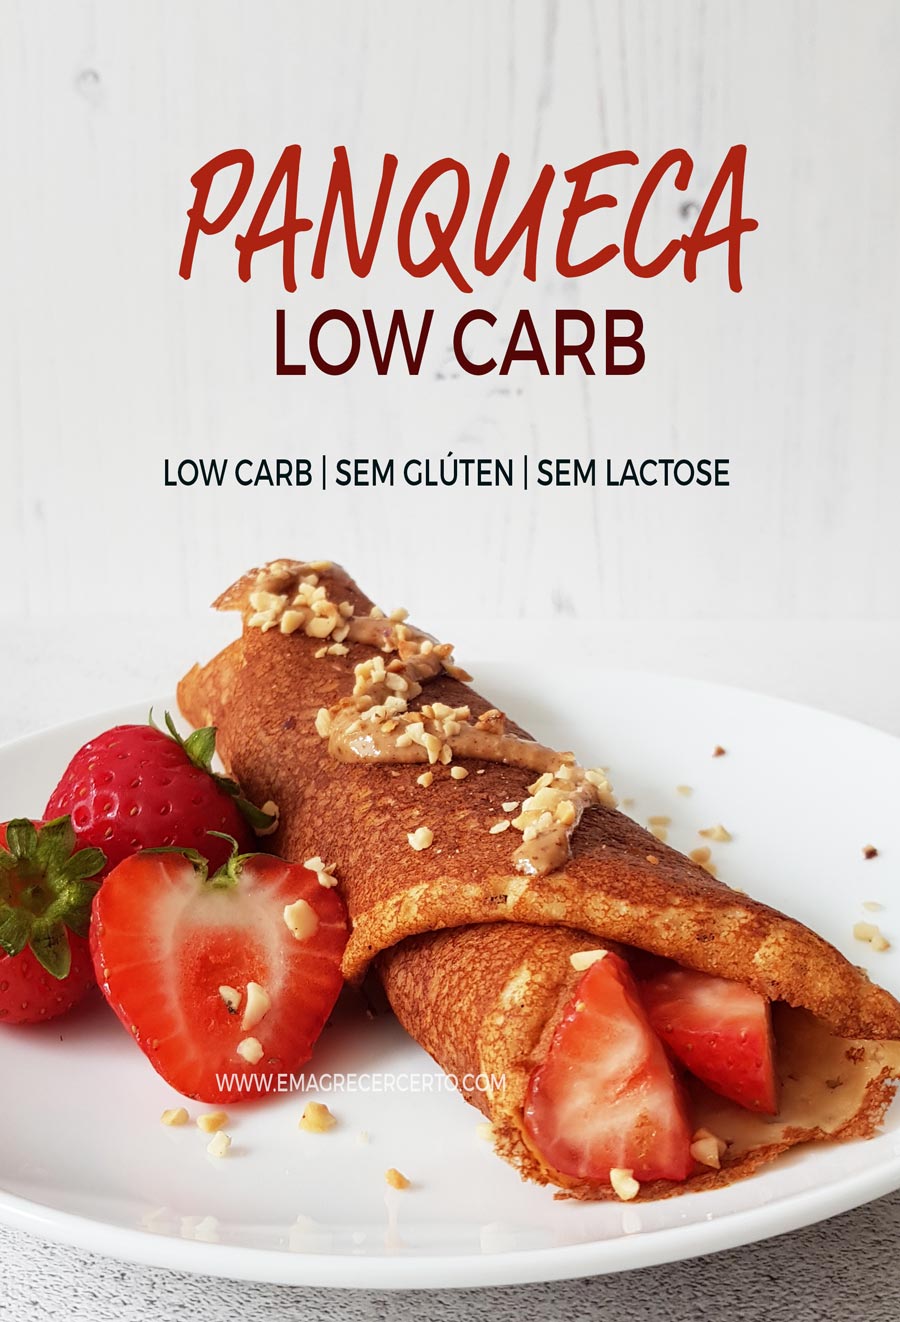 Panqueca Low Carb com 4 Ingredientes | Blog Emagrecer Certo #panqueca #lowcarb #emagrecercerto #emagrecer #paleo #semgluten #semlactose